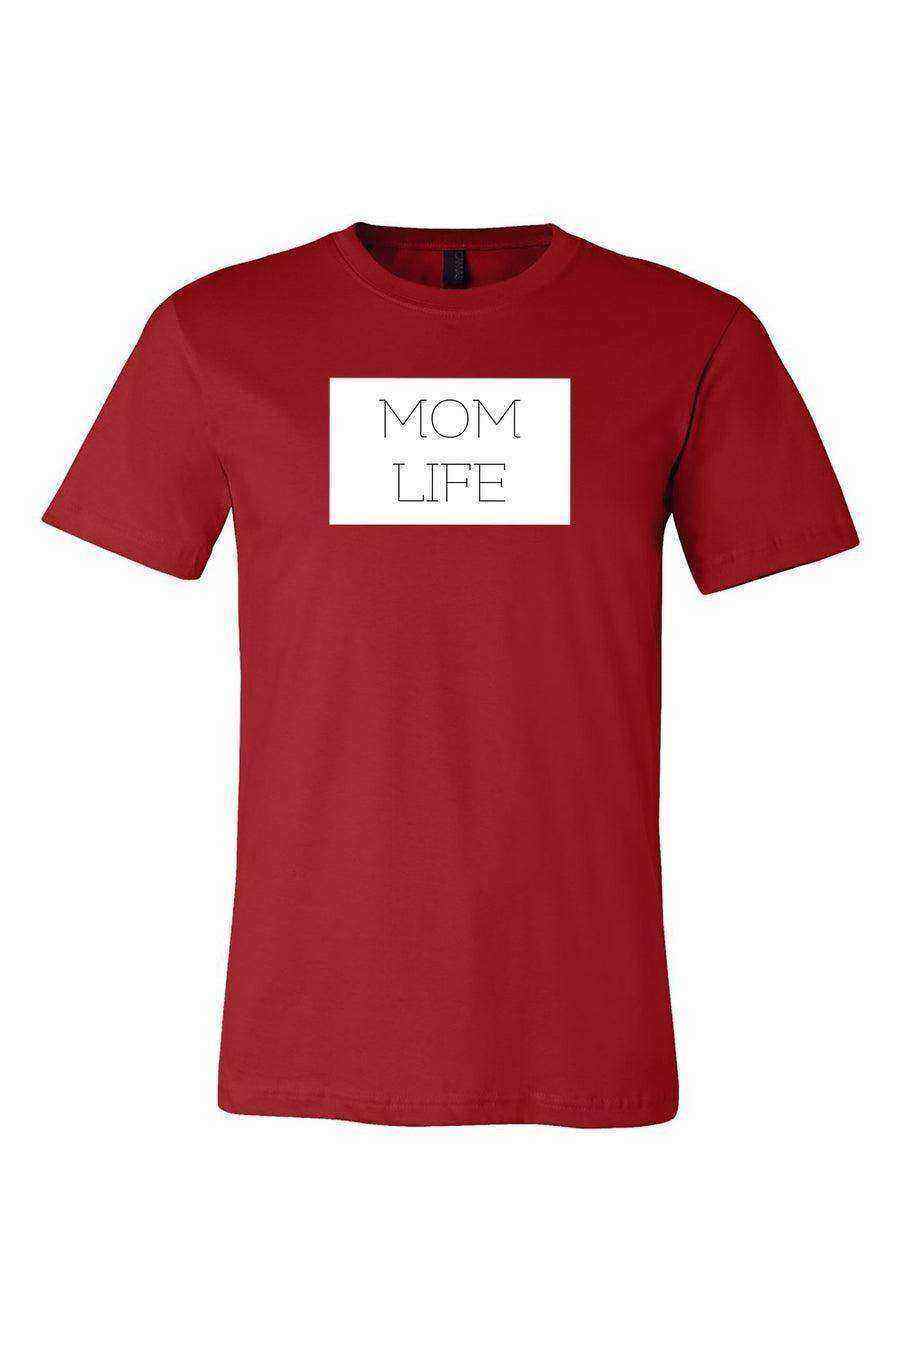 Mom Life Shirt - Dylan's Tees